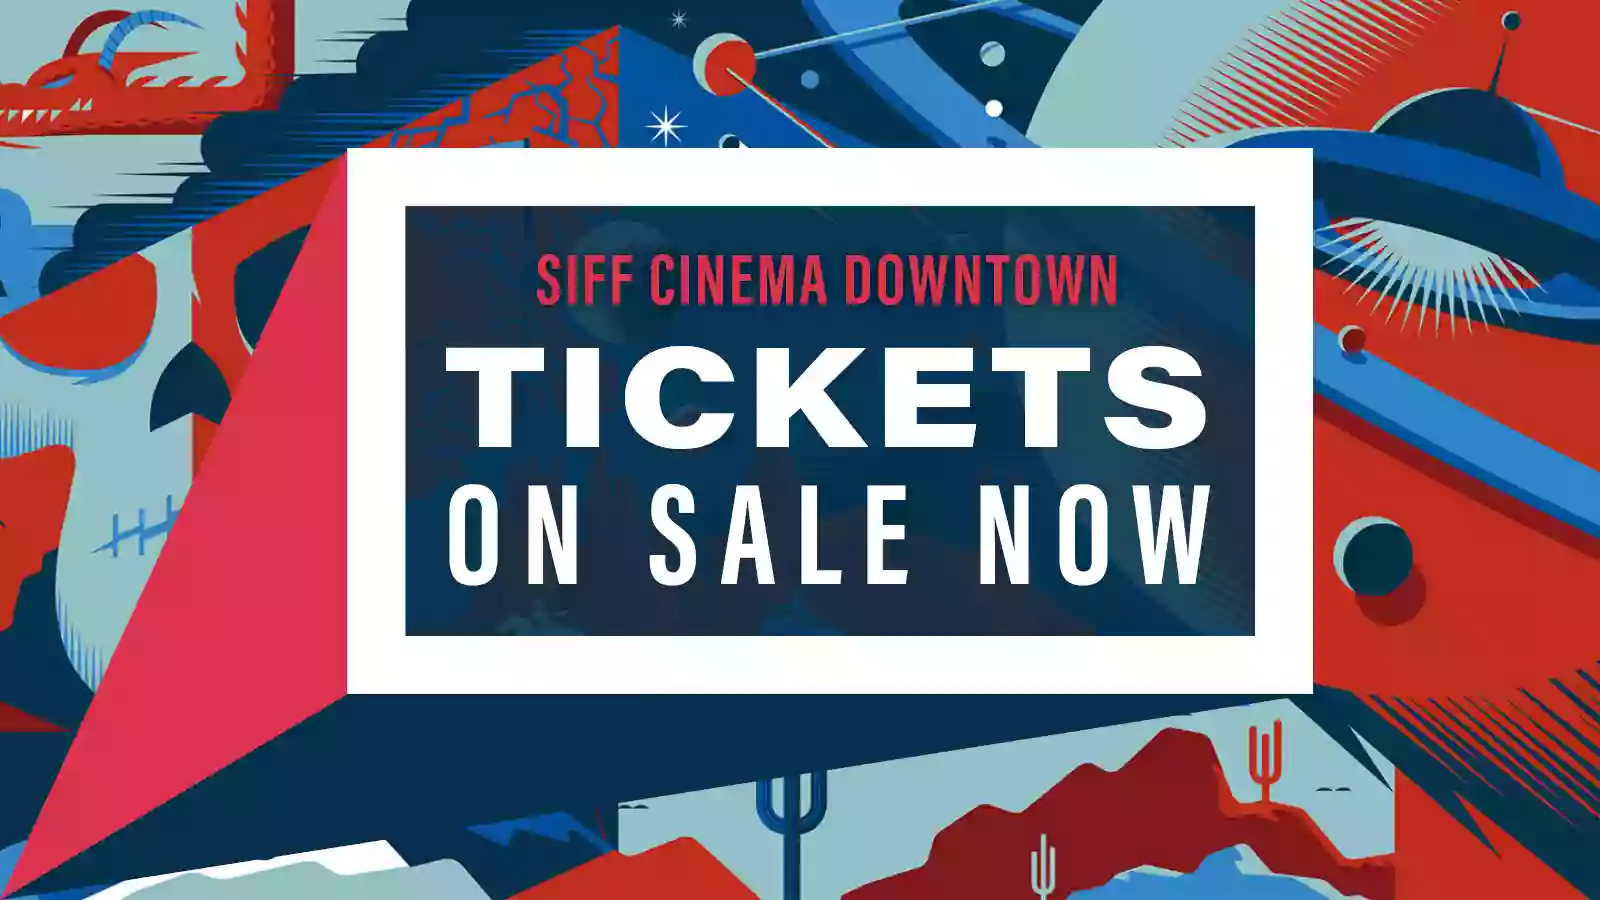 SIFF Cinema Downtown